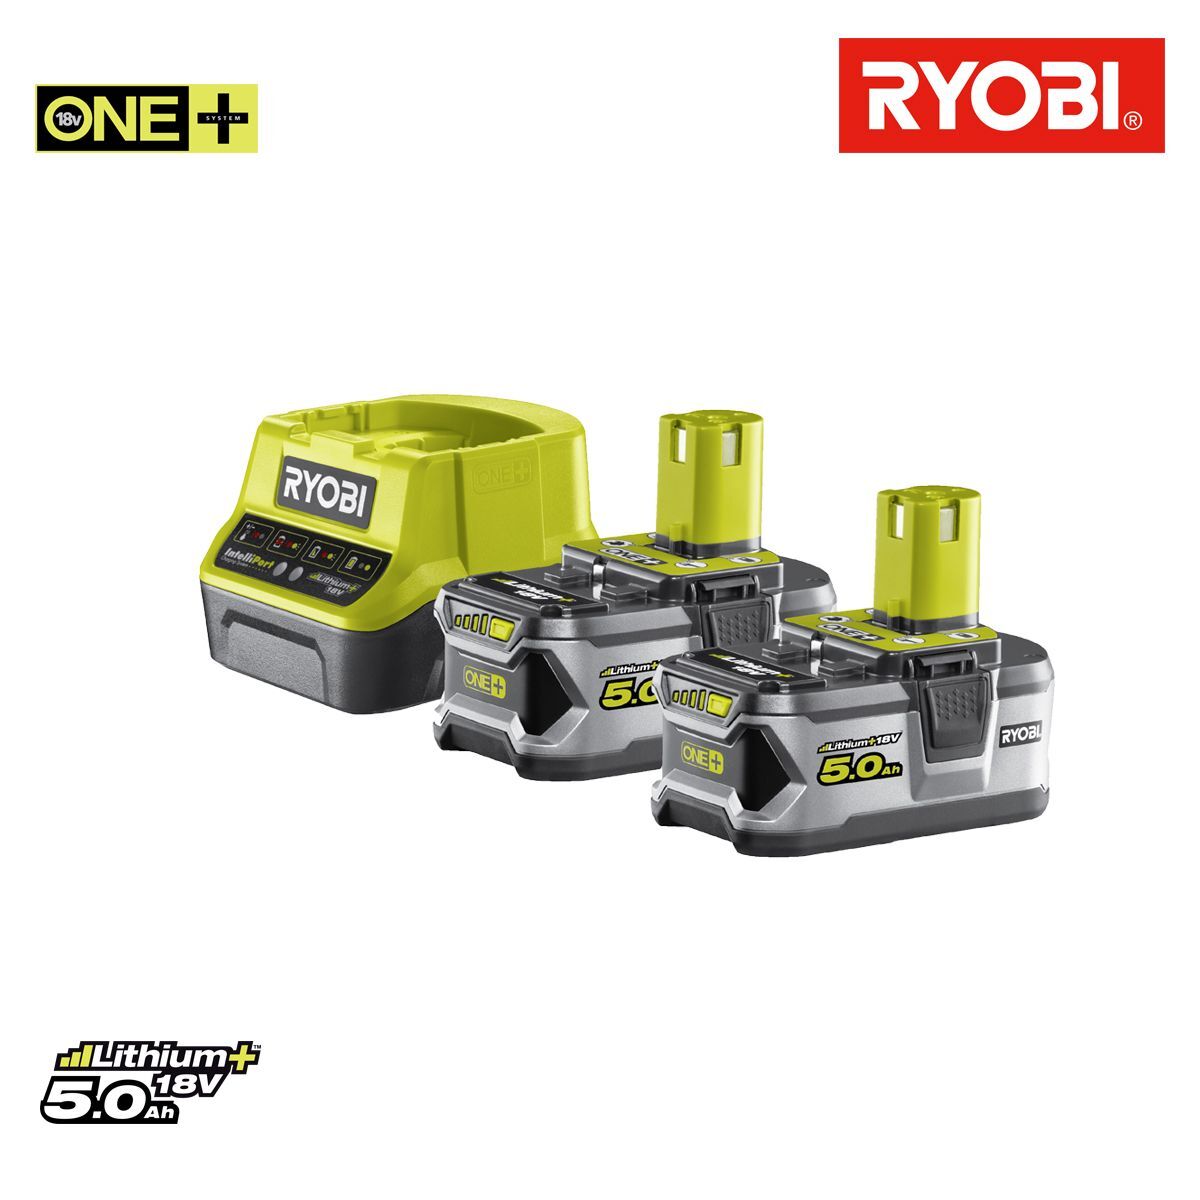 Pack 2 batteries RYOBI 18V OnePlus 5.0Ah LithiumPlus - 1 chargeur rapide 2.0Ah RC18120-250